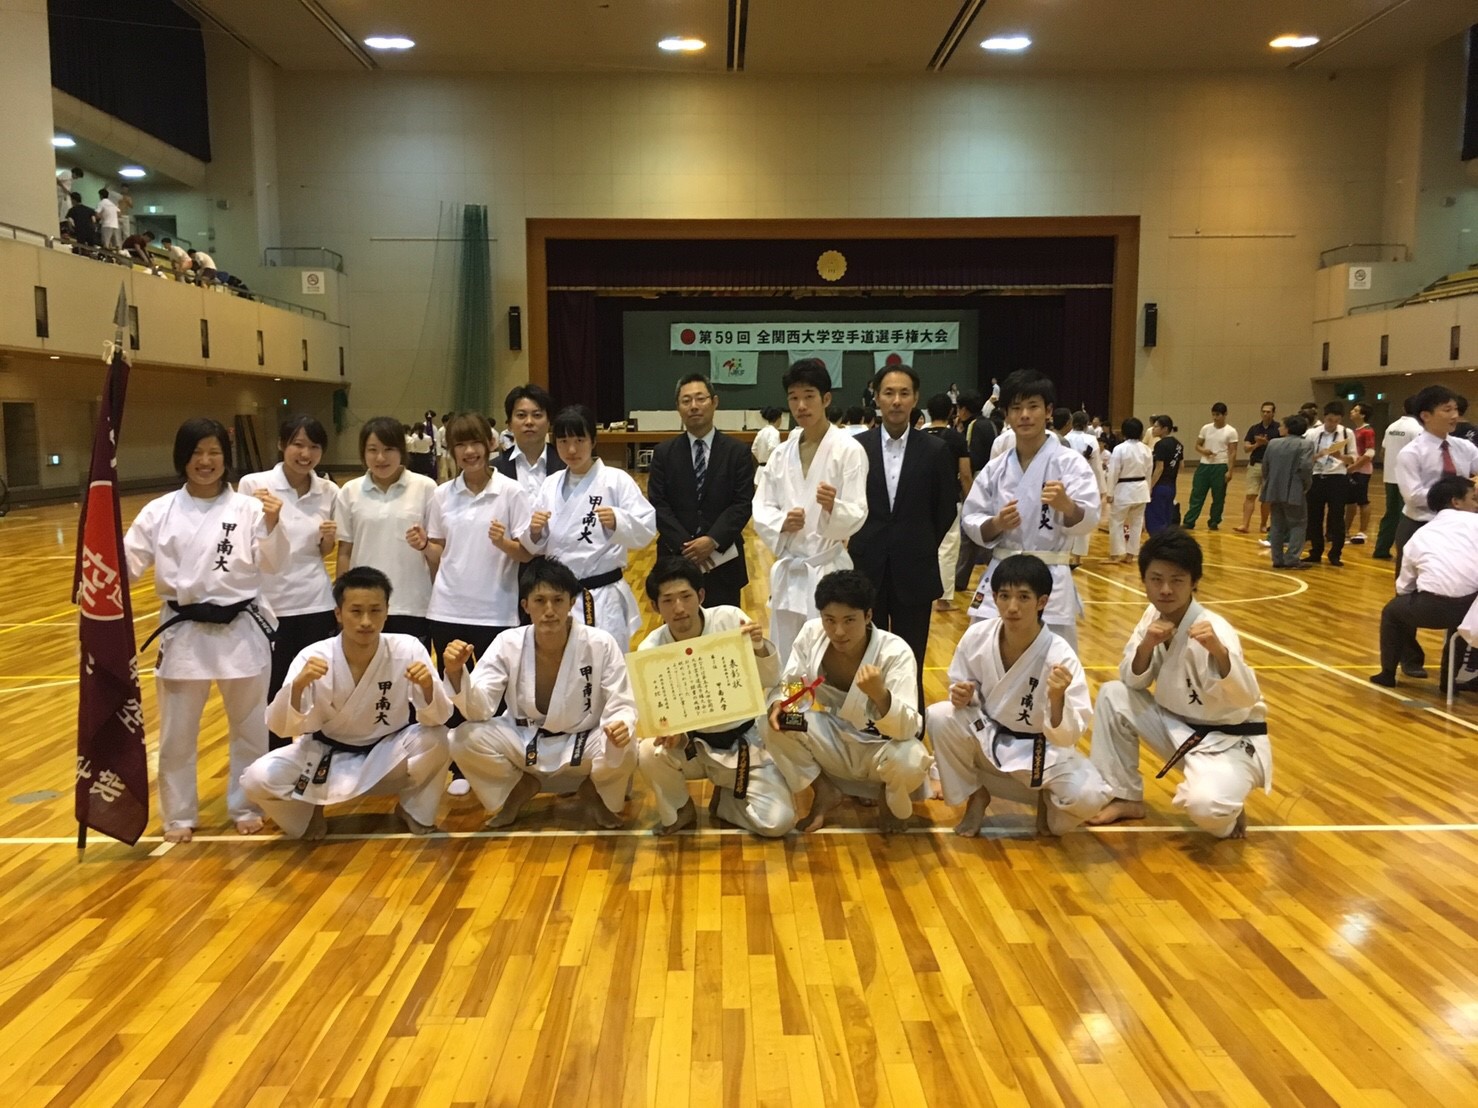 http://www.konan-u.ac.jp/club/karate-club/uploads/201610/2016%20%E5%85%A8%E9%96%A2%E8%A5%BF%E5%9B%A3%E4%BD%93.jpg